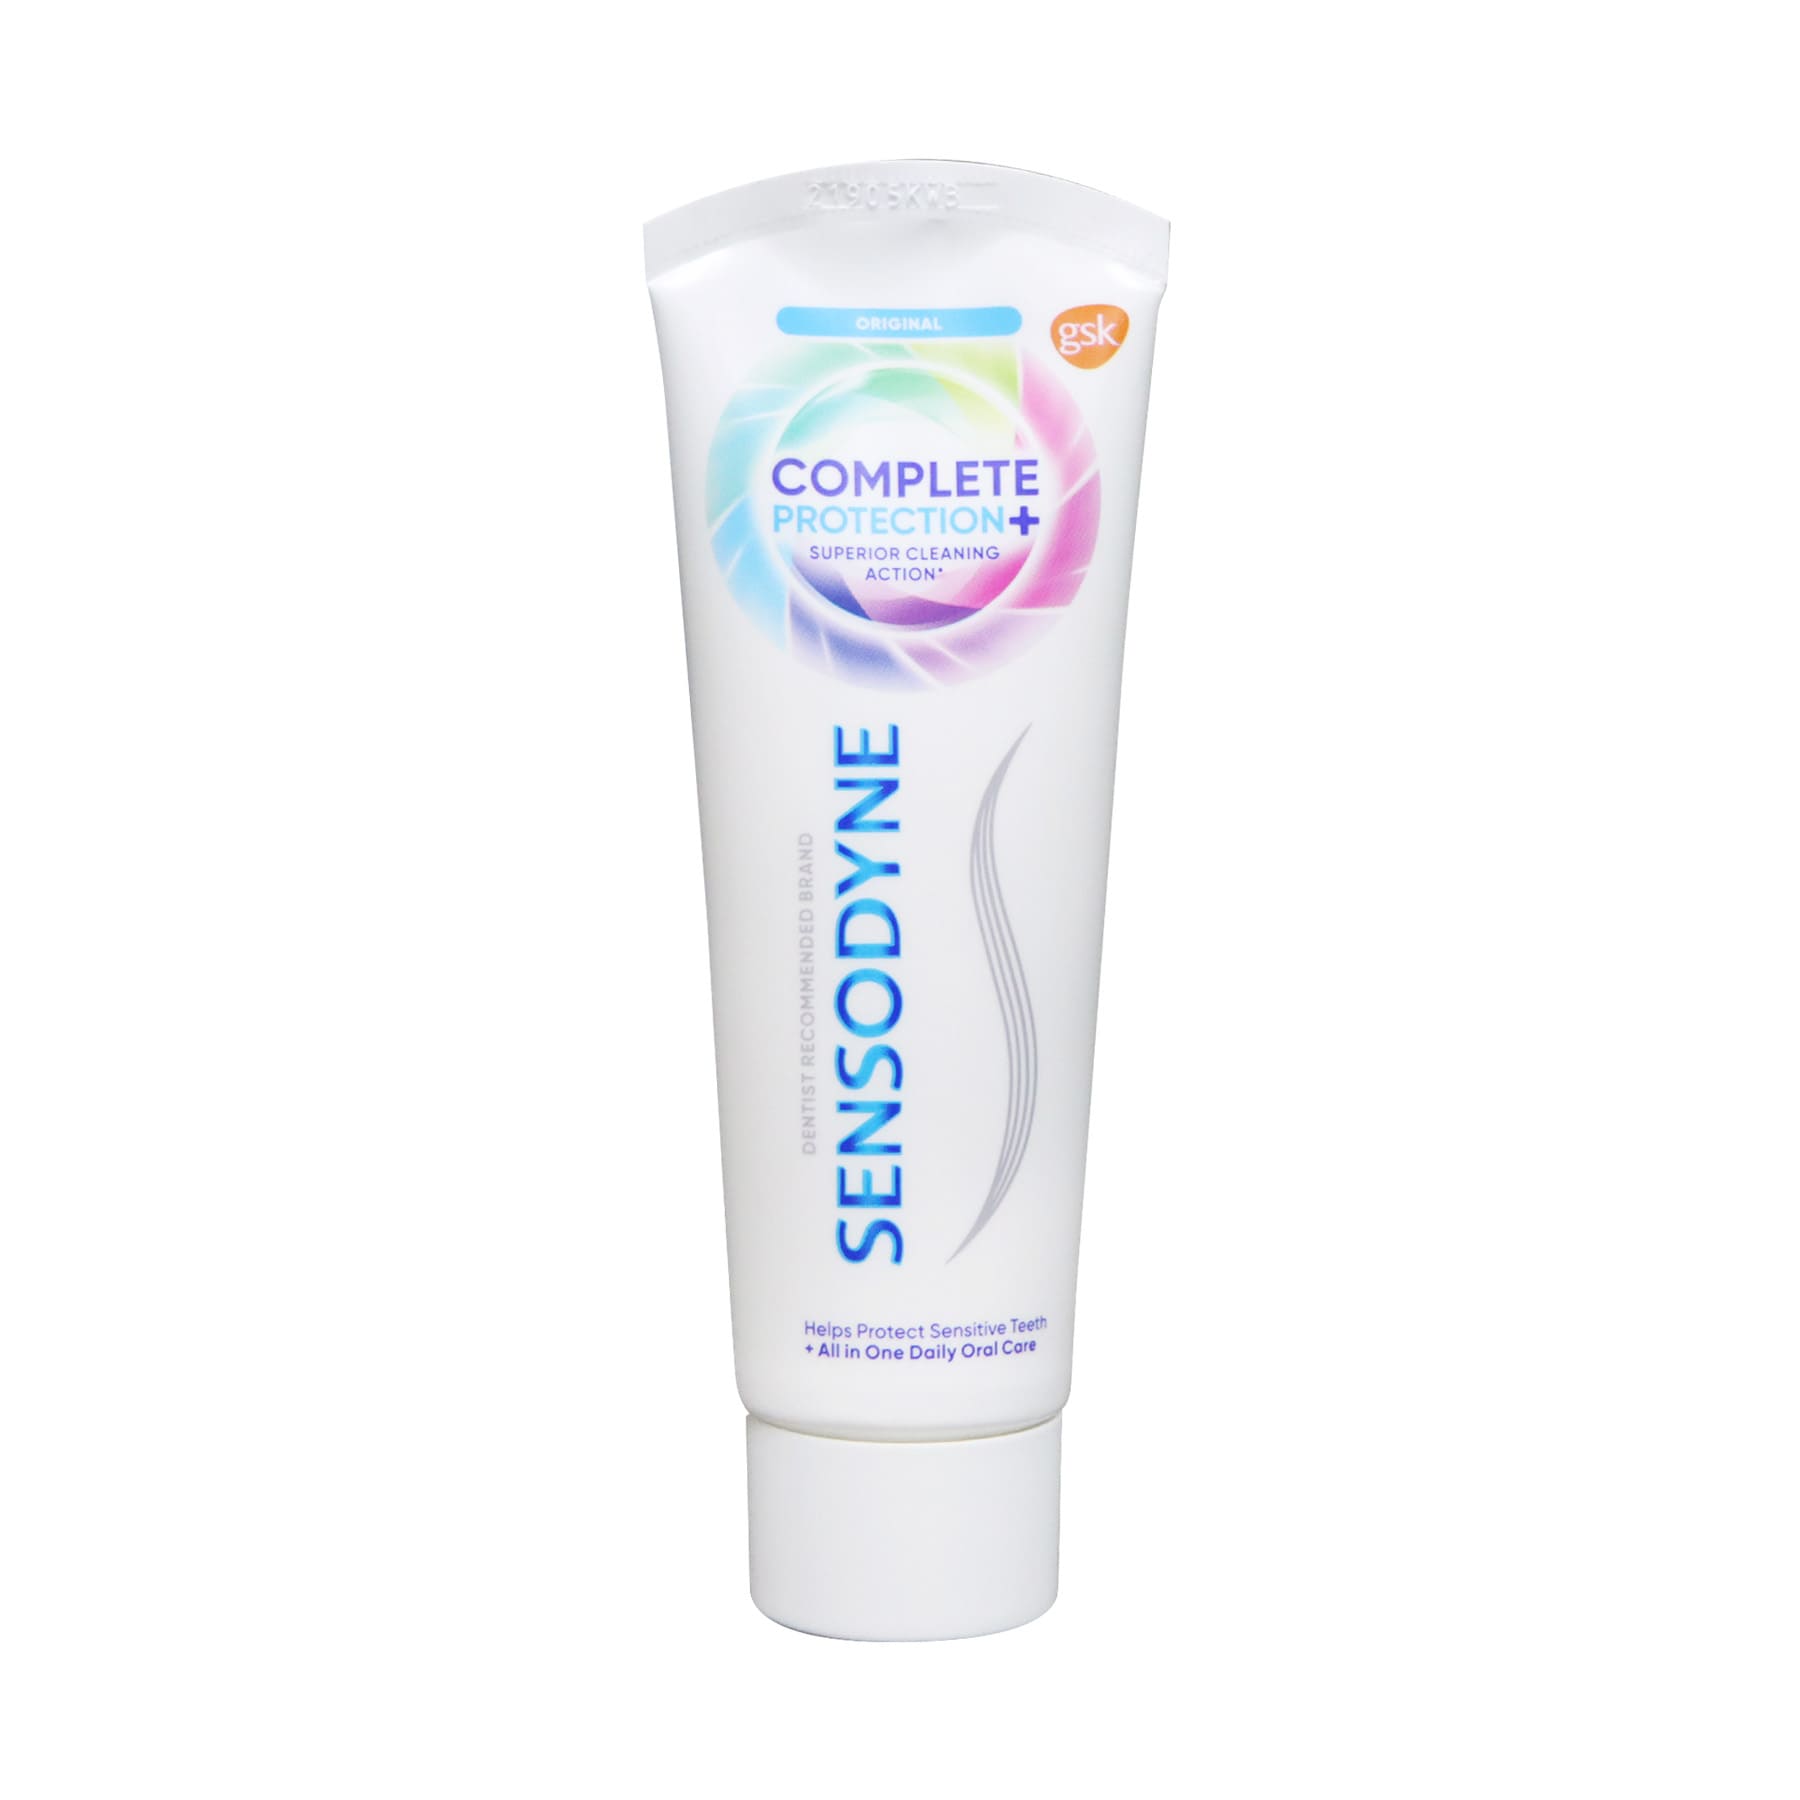 Sensodyne Complete Protection+ Original Toothpaste 75ml x 2